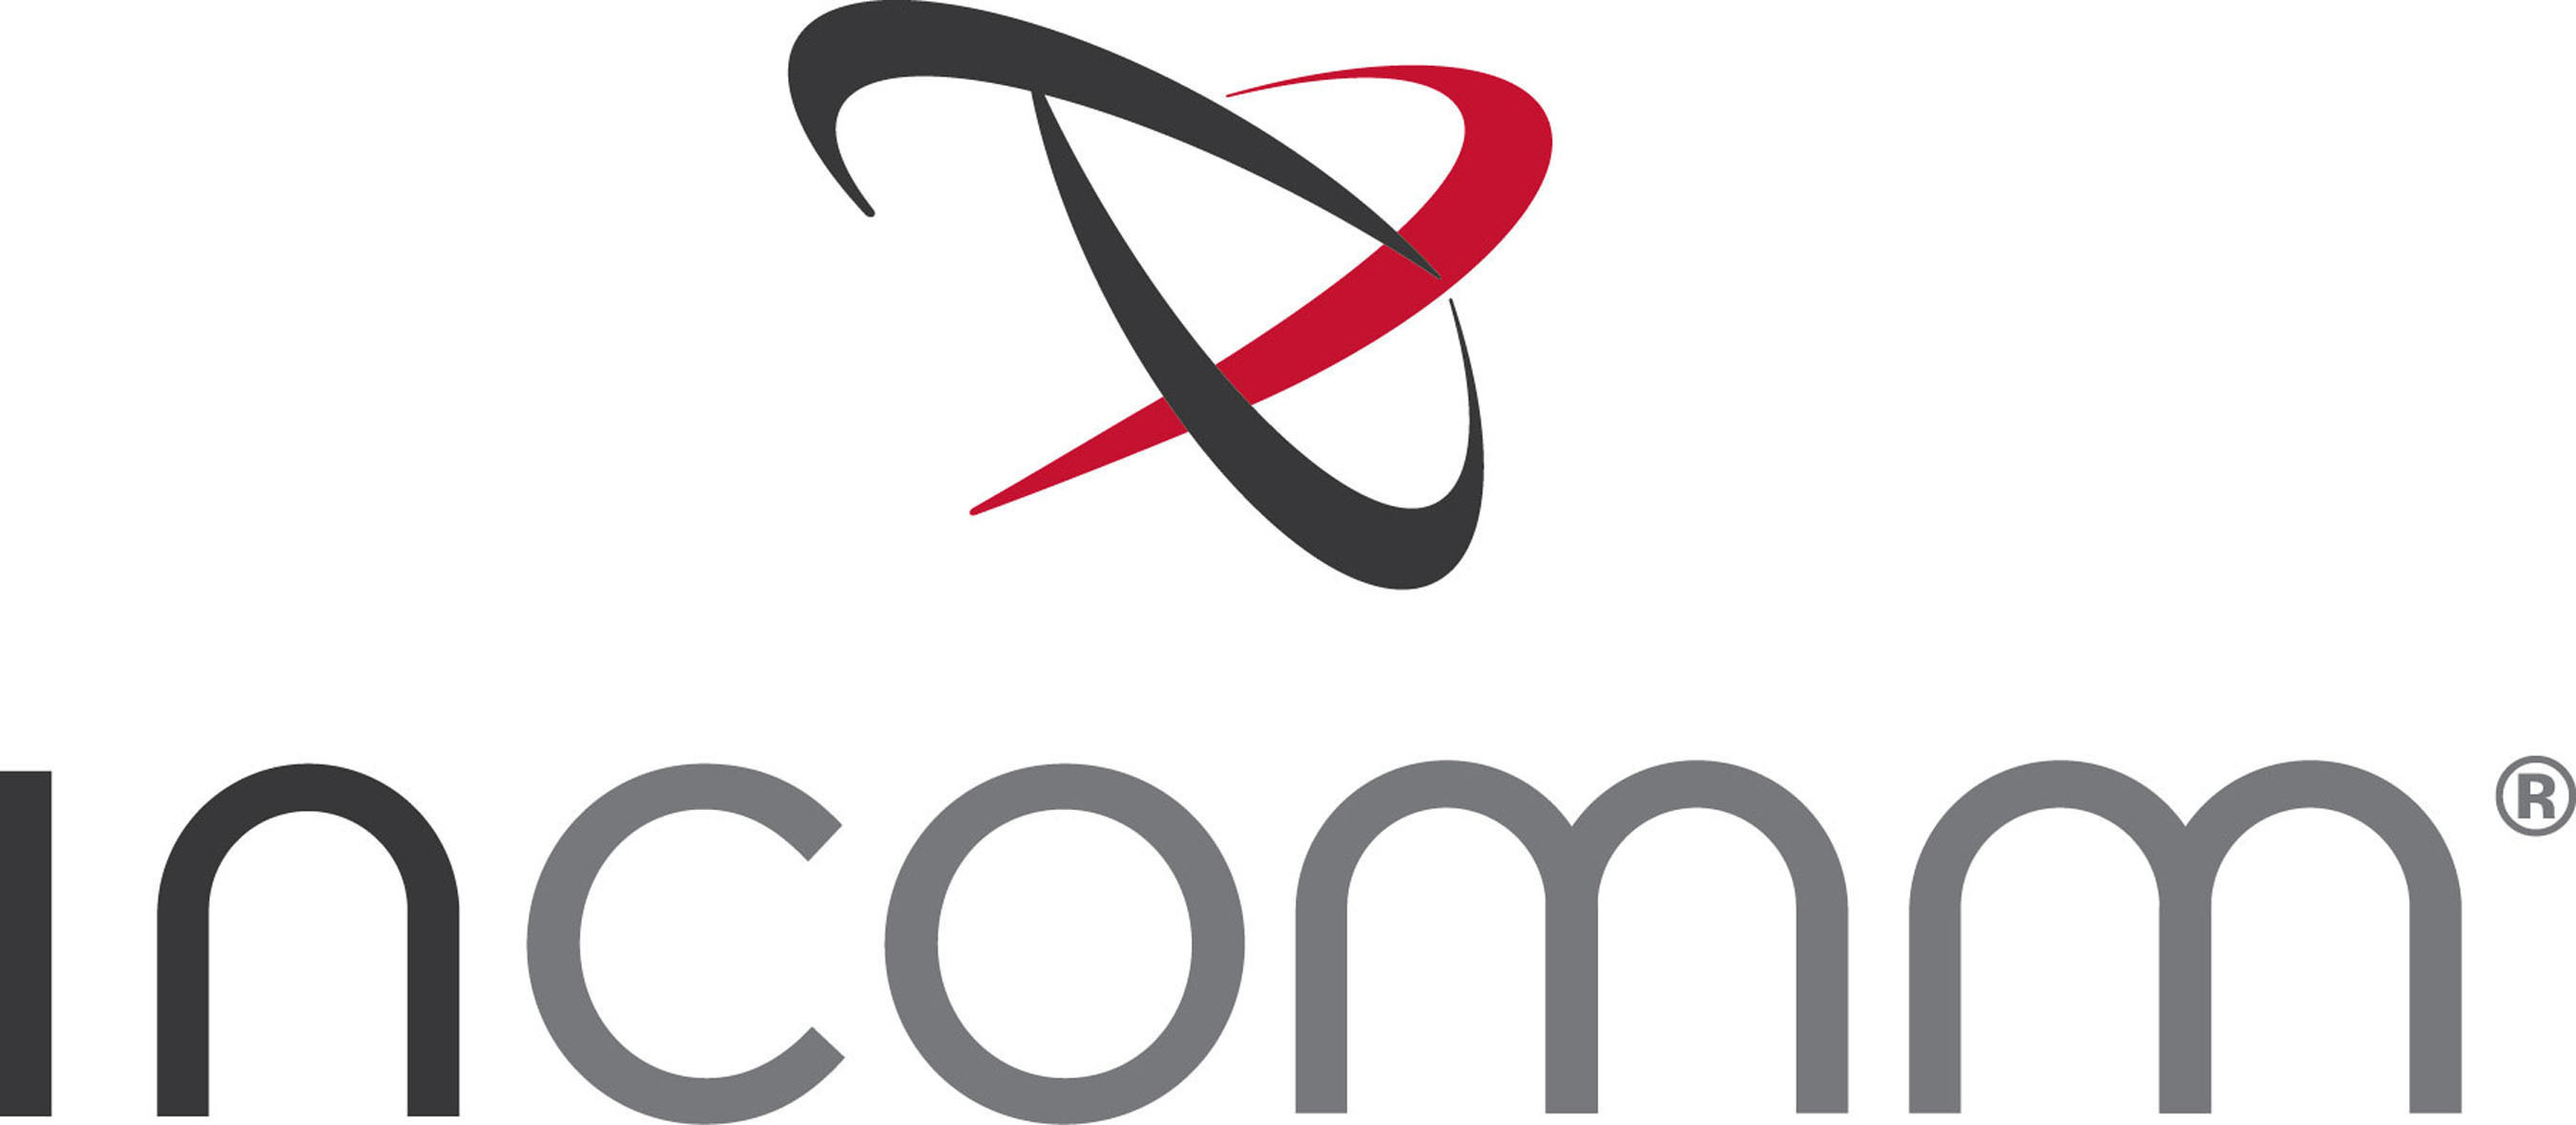 InComm logo.